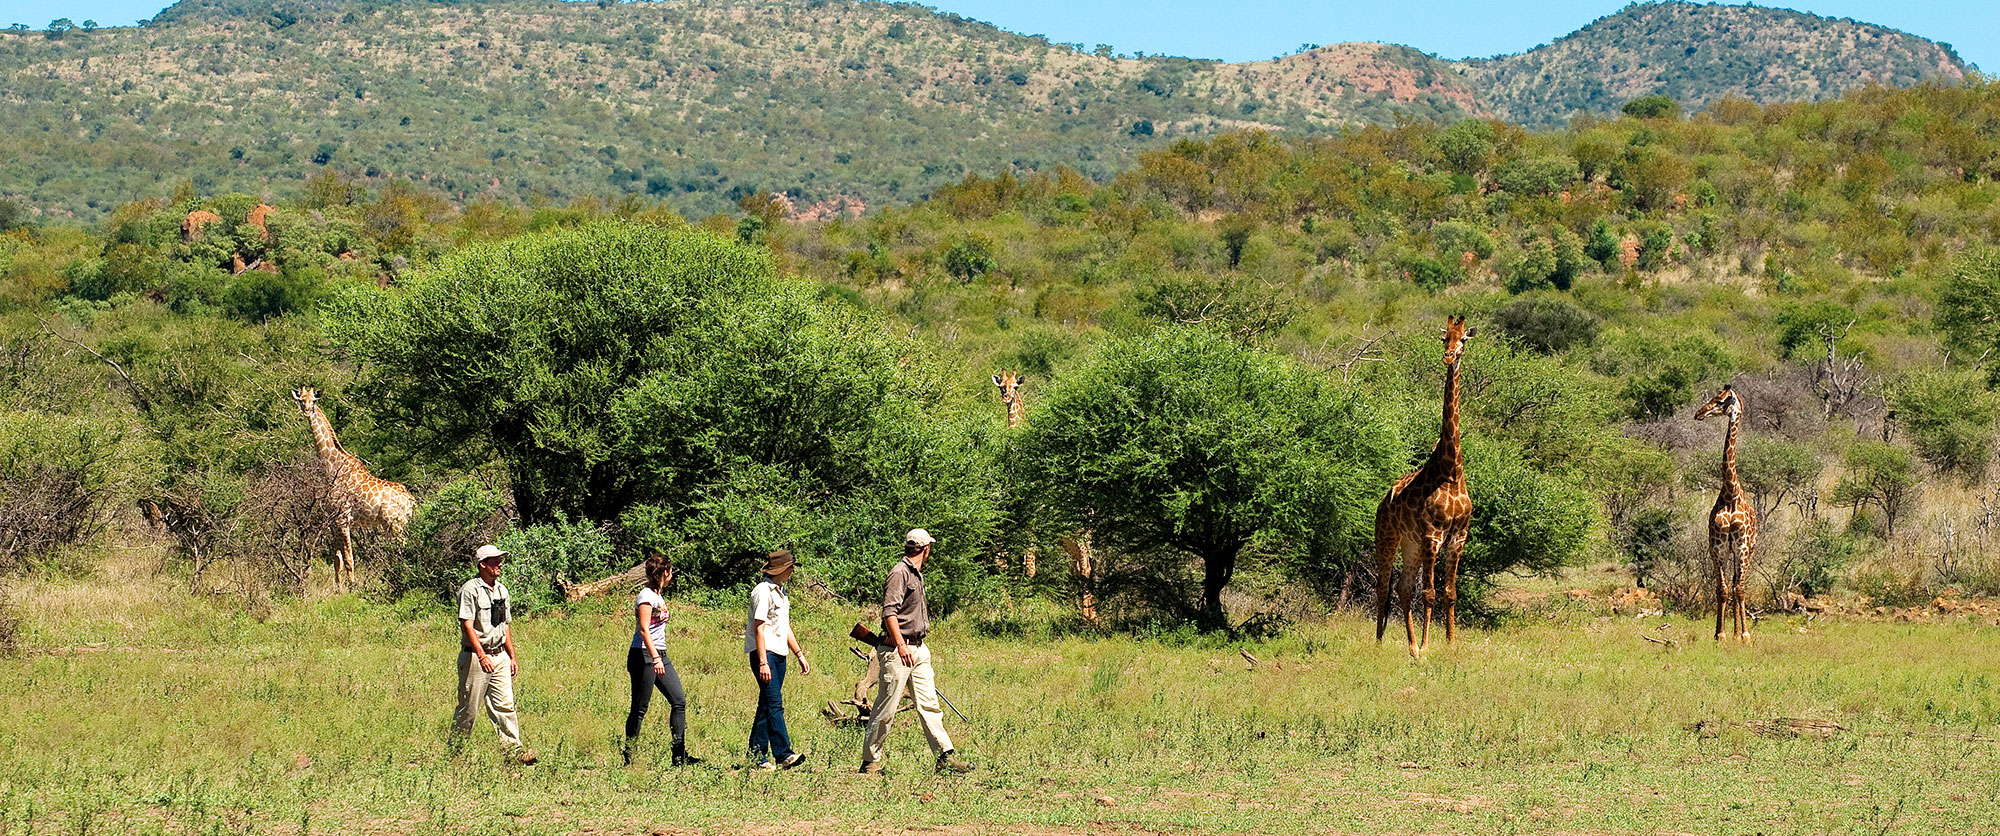 Trip to Africa: Cape Town and Luxury Safari Honeymoon